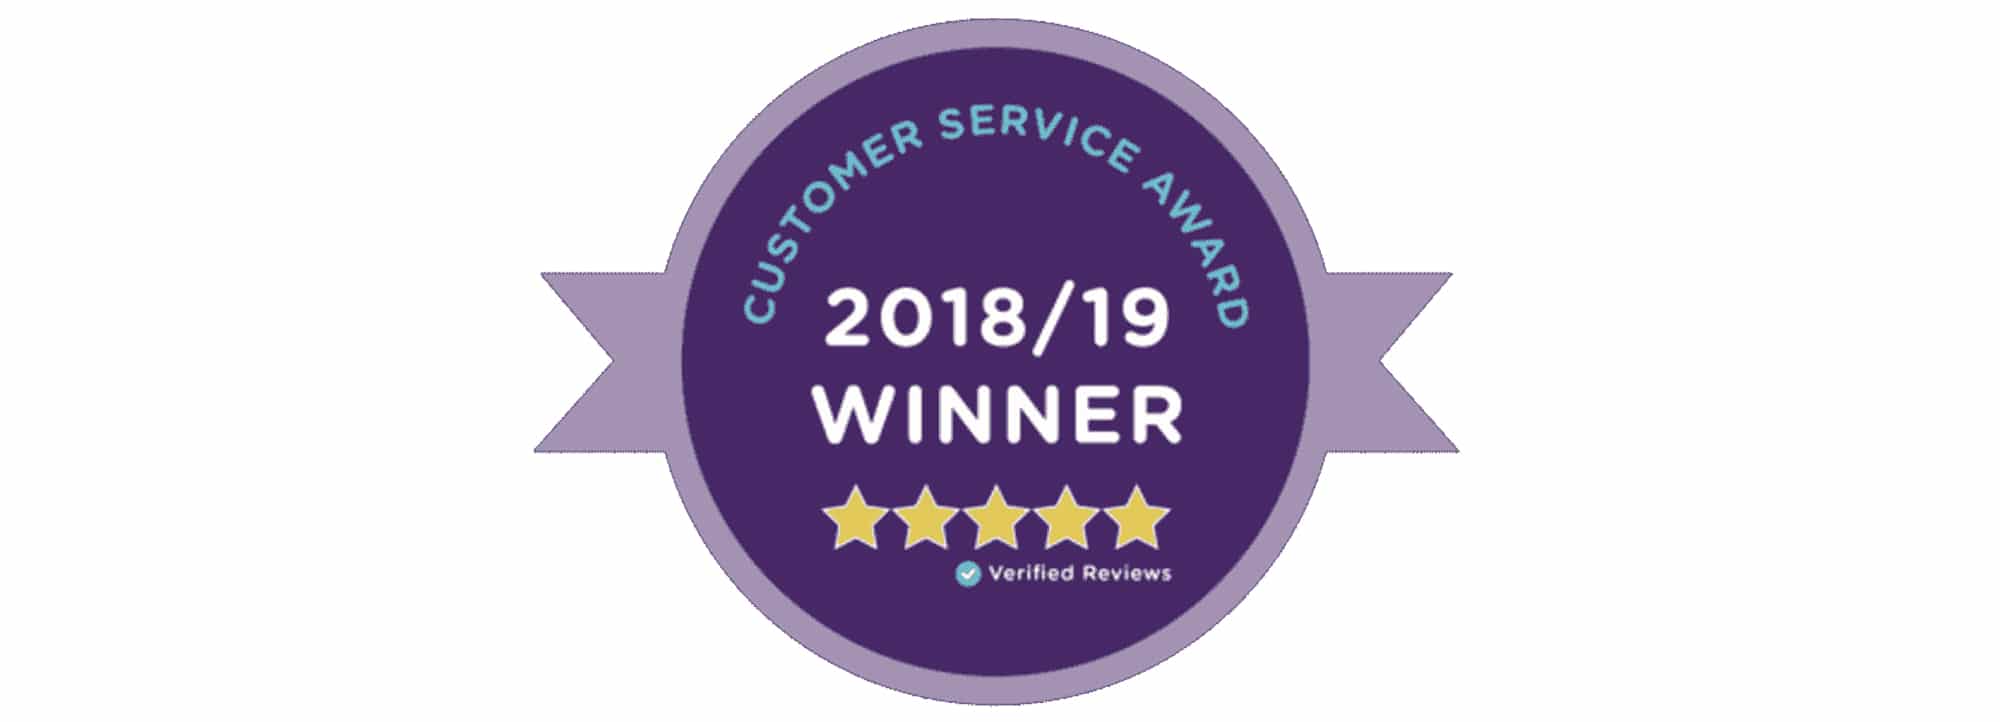 Wispers Wins Customer Service Award